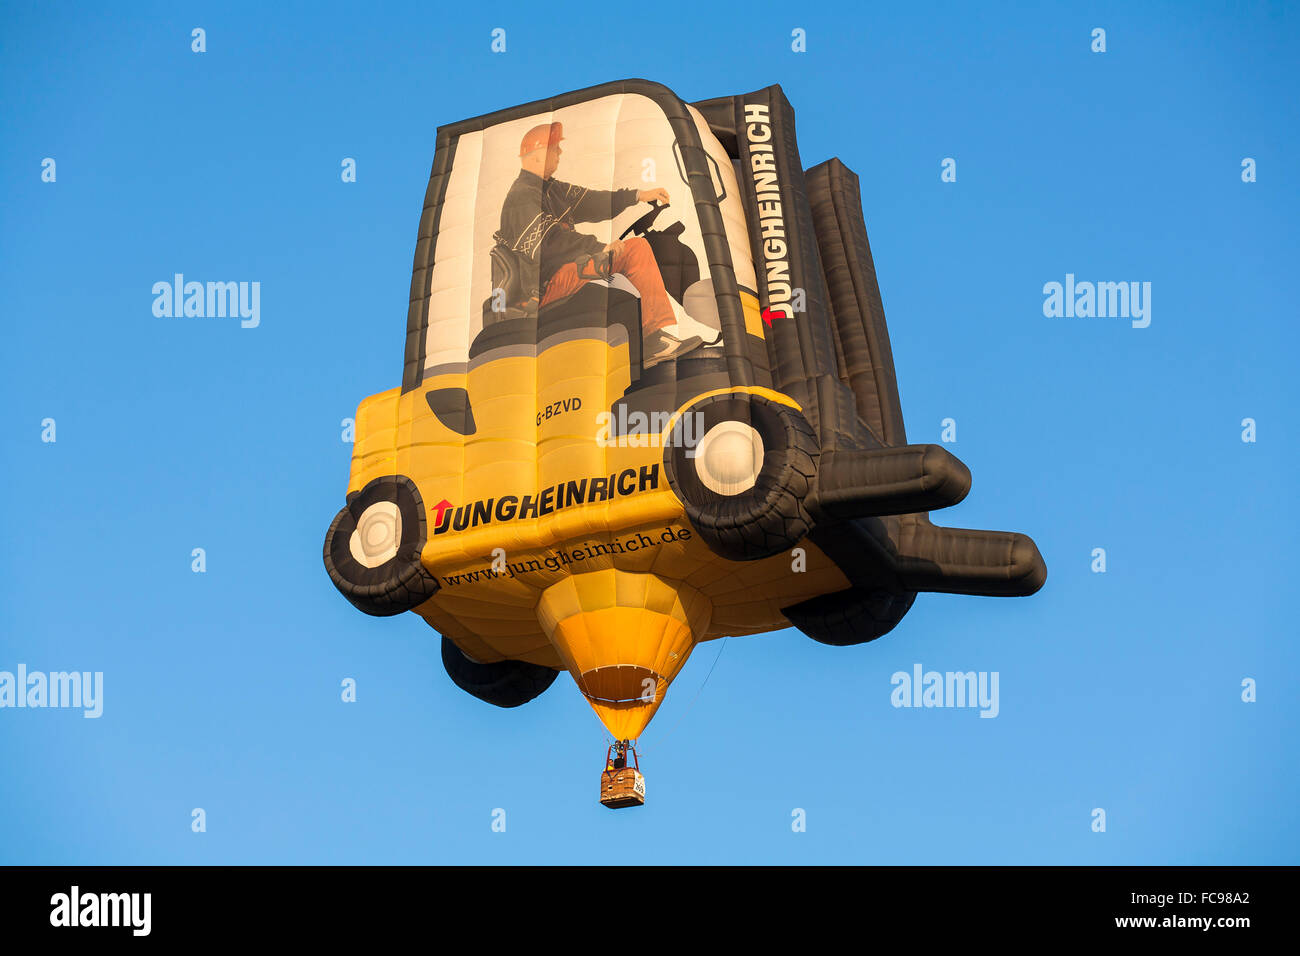 DEU, Germany, Sauerland region, Warstein, international balloon festival in Warstein, balloon in the shape of a fork lift truck  Stock Photo